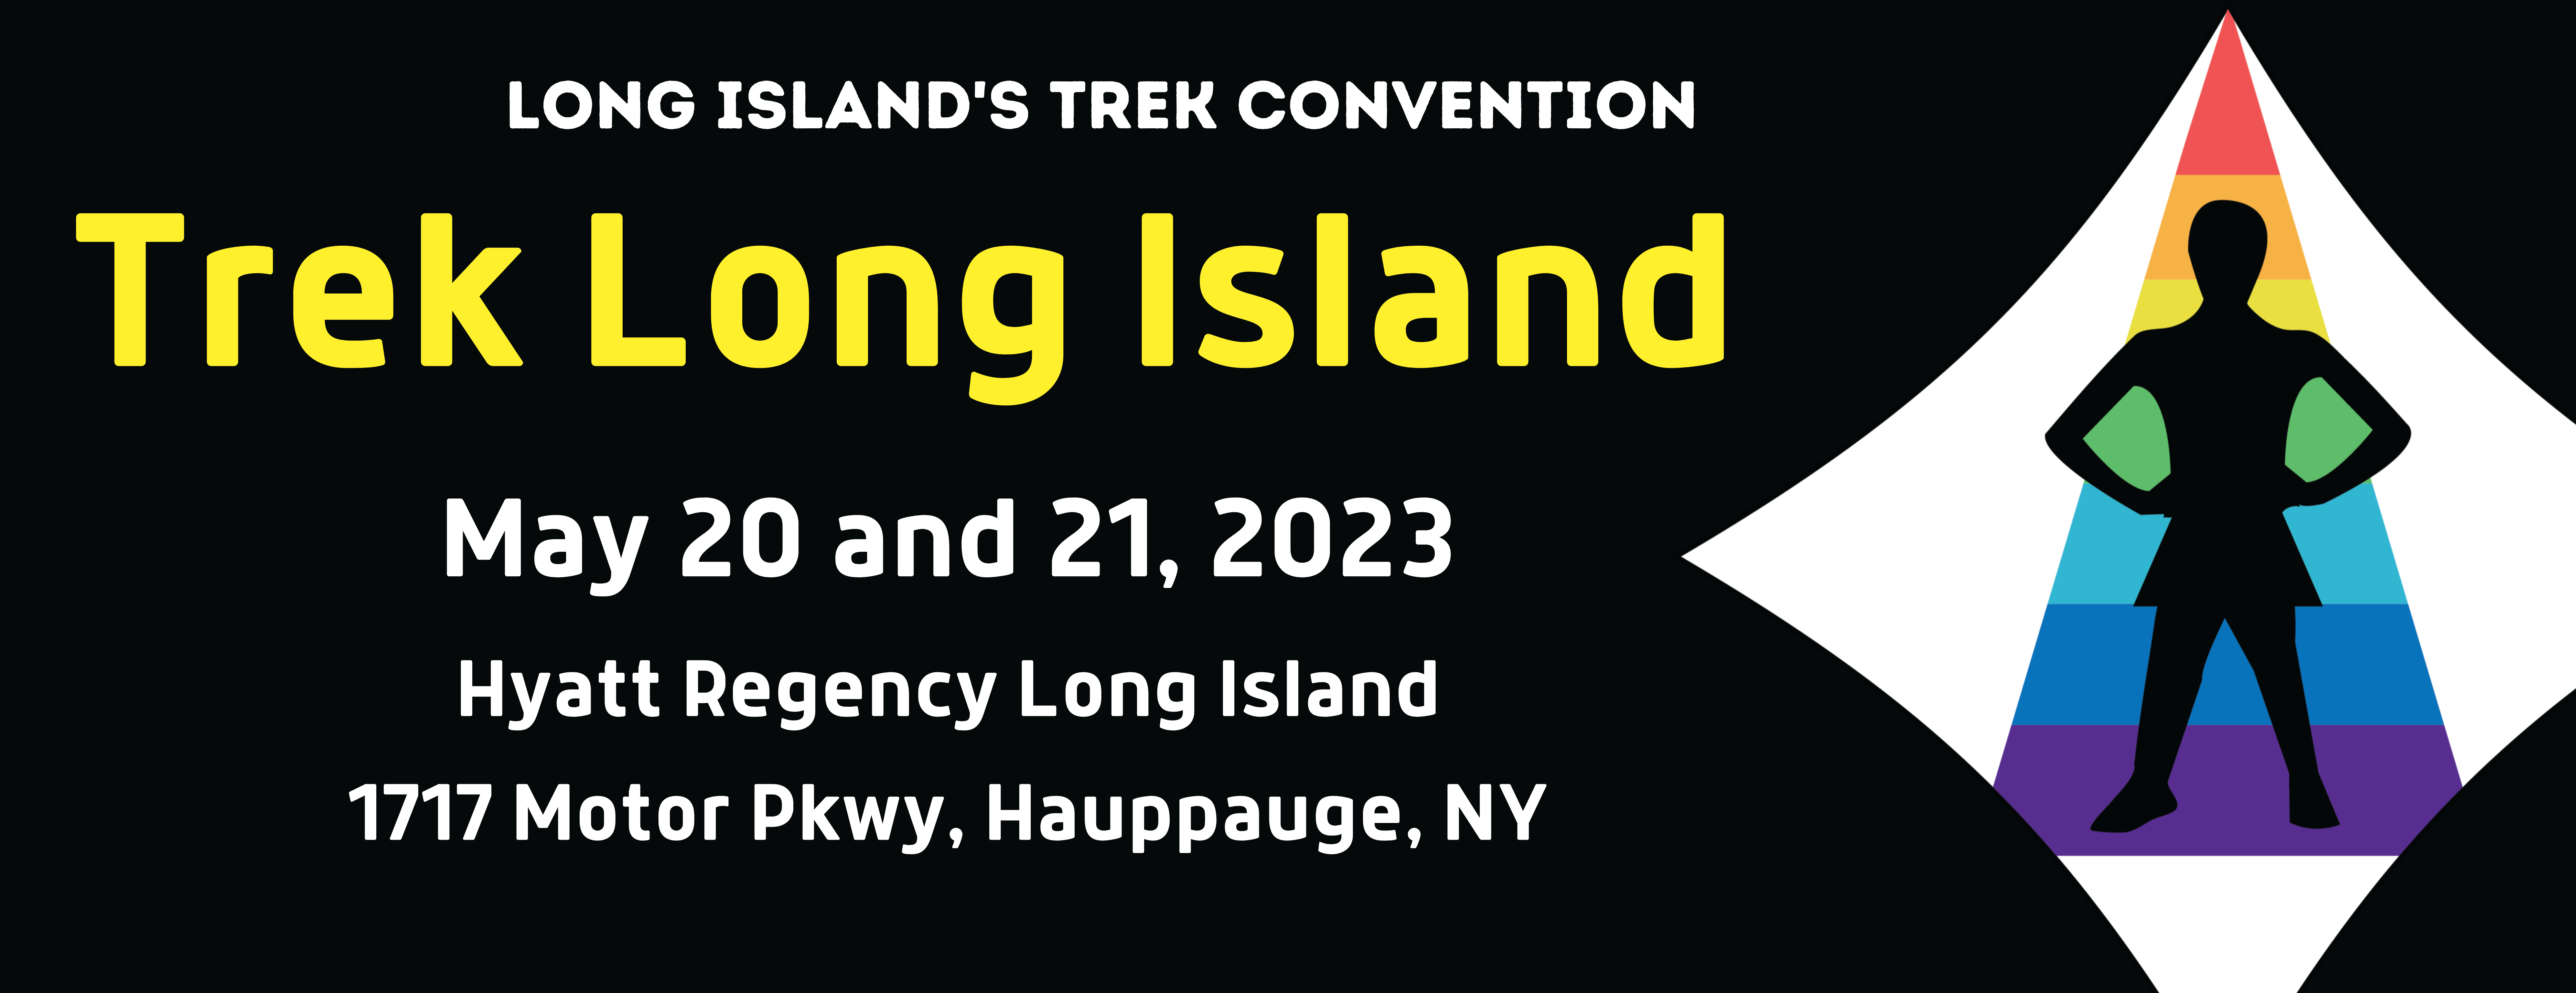 Trek Long Island convention-2023